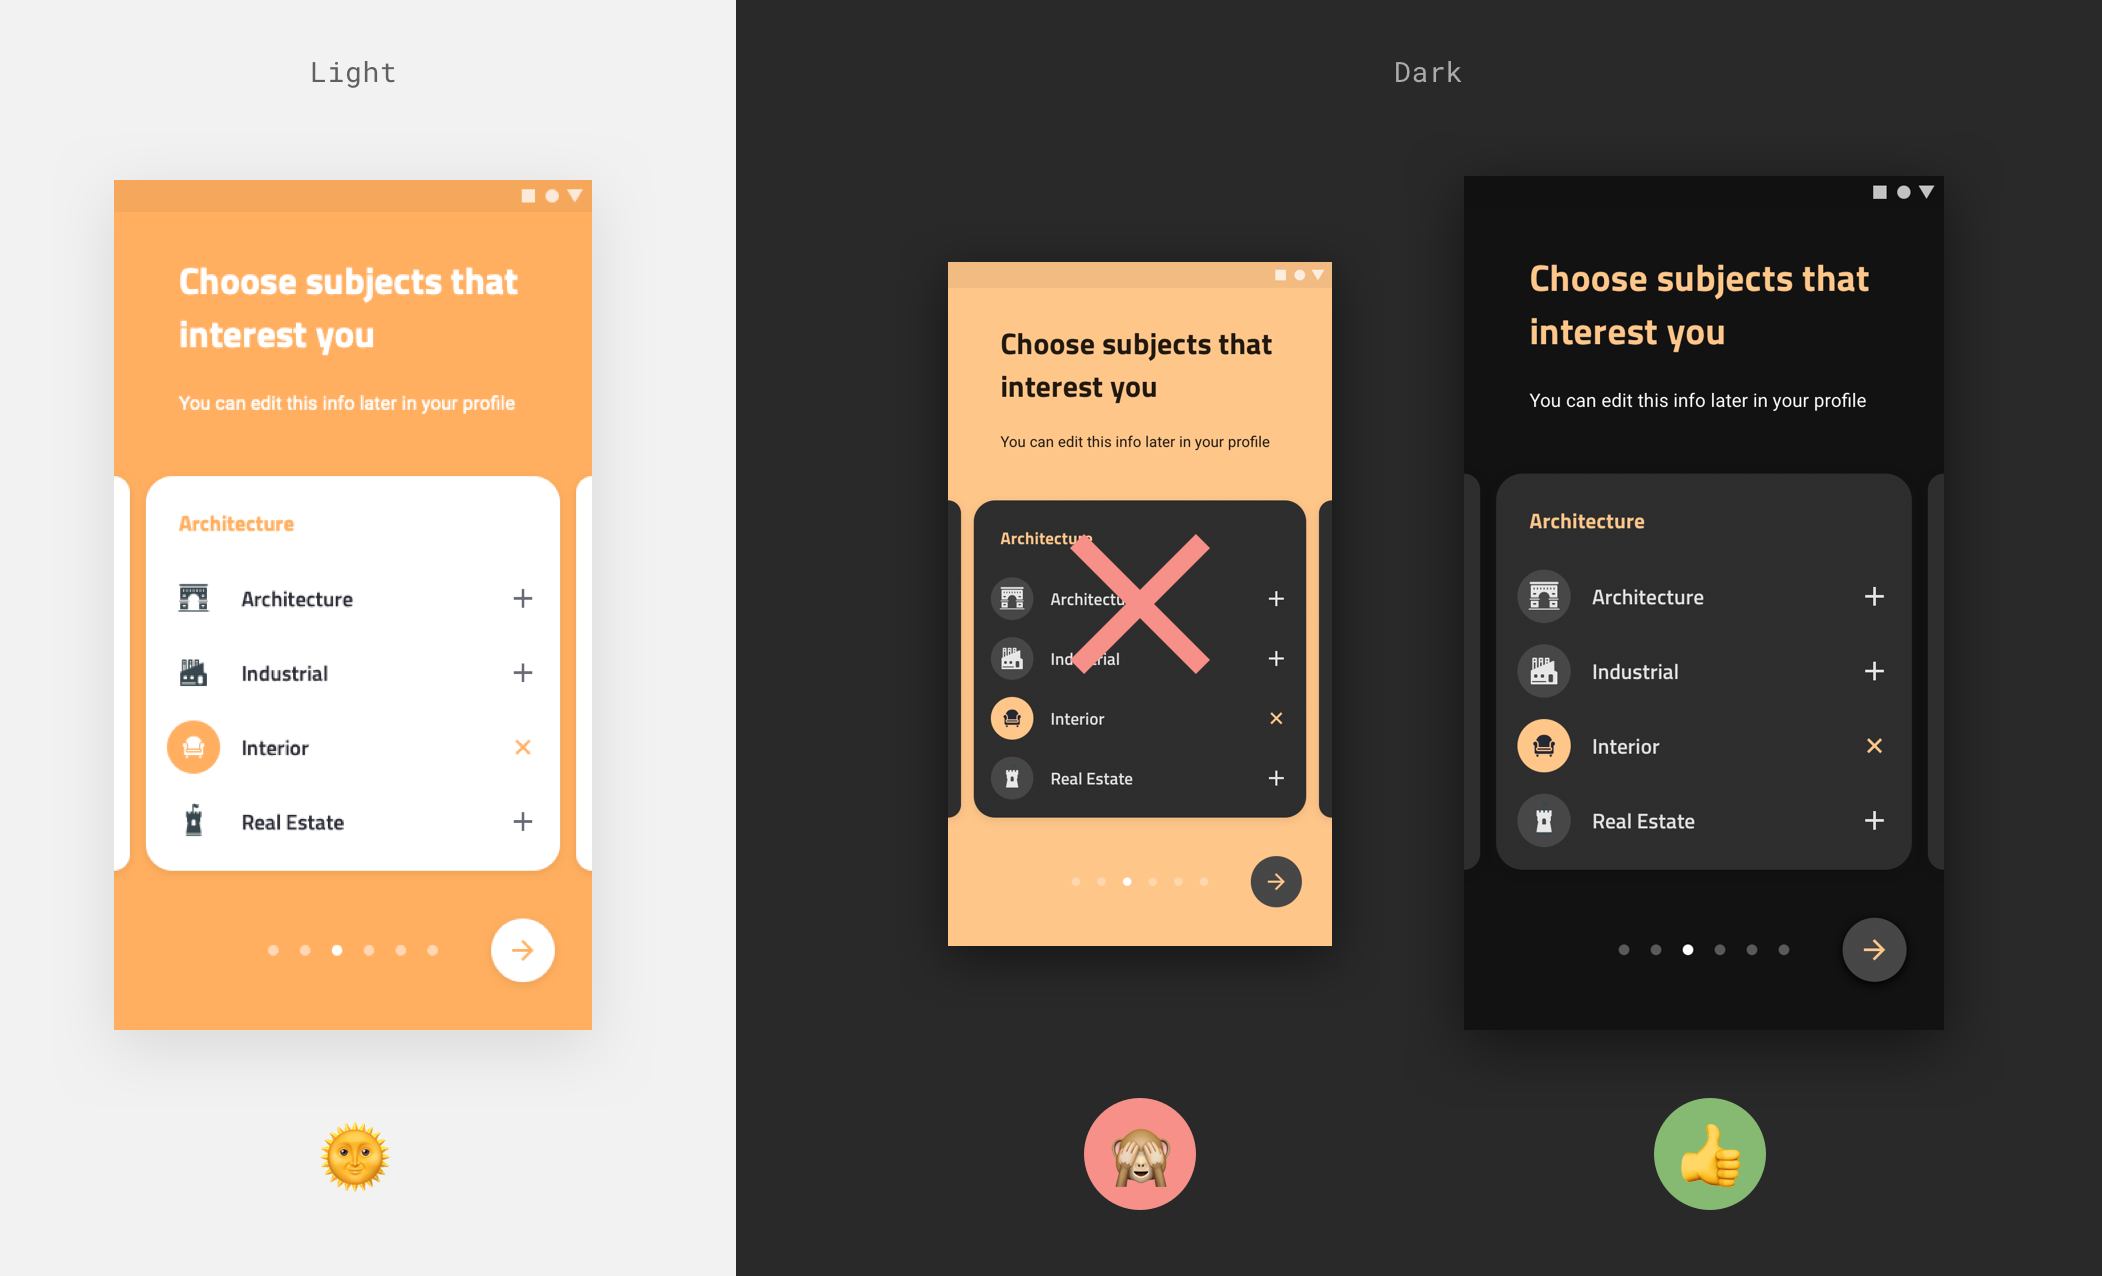 Design For The Dark Theme Bringing The Dark Ui On Android Apps By Pierluigi Rufo Snapp Mobile Medium